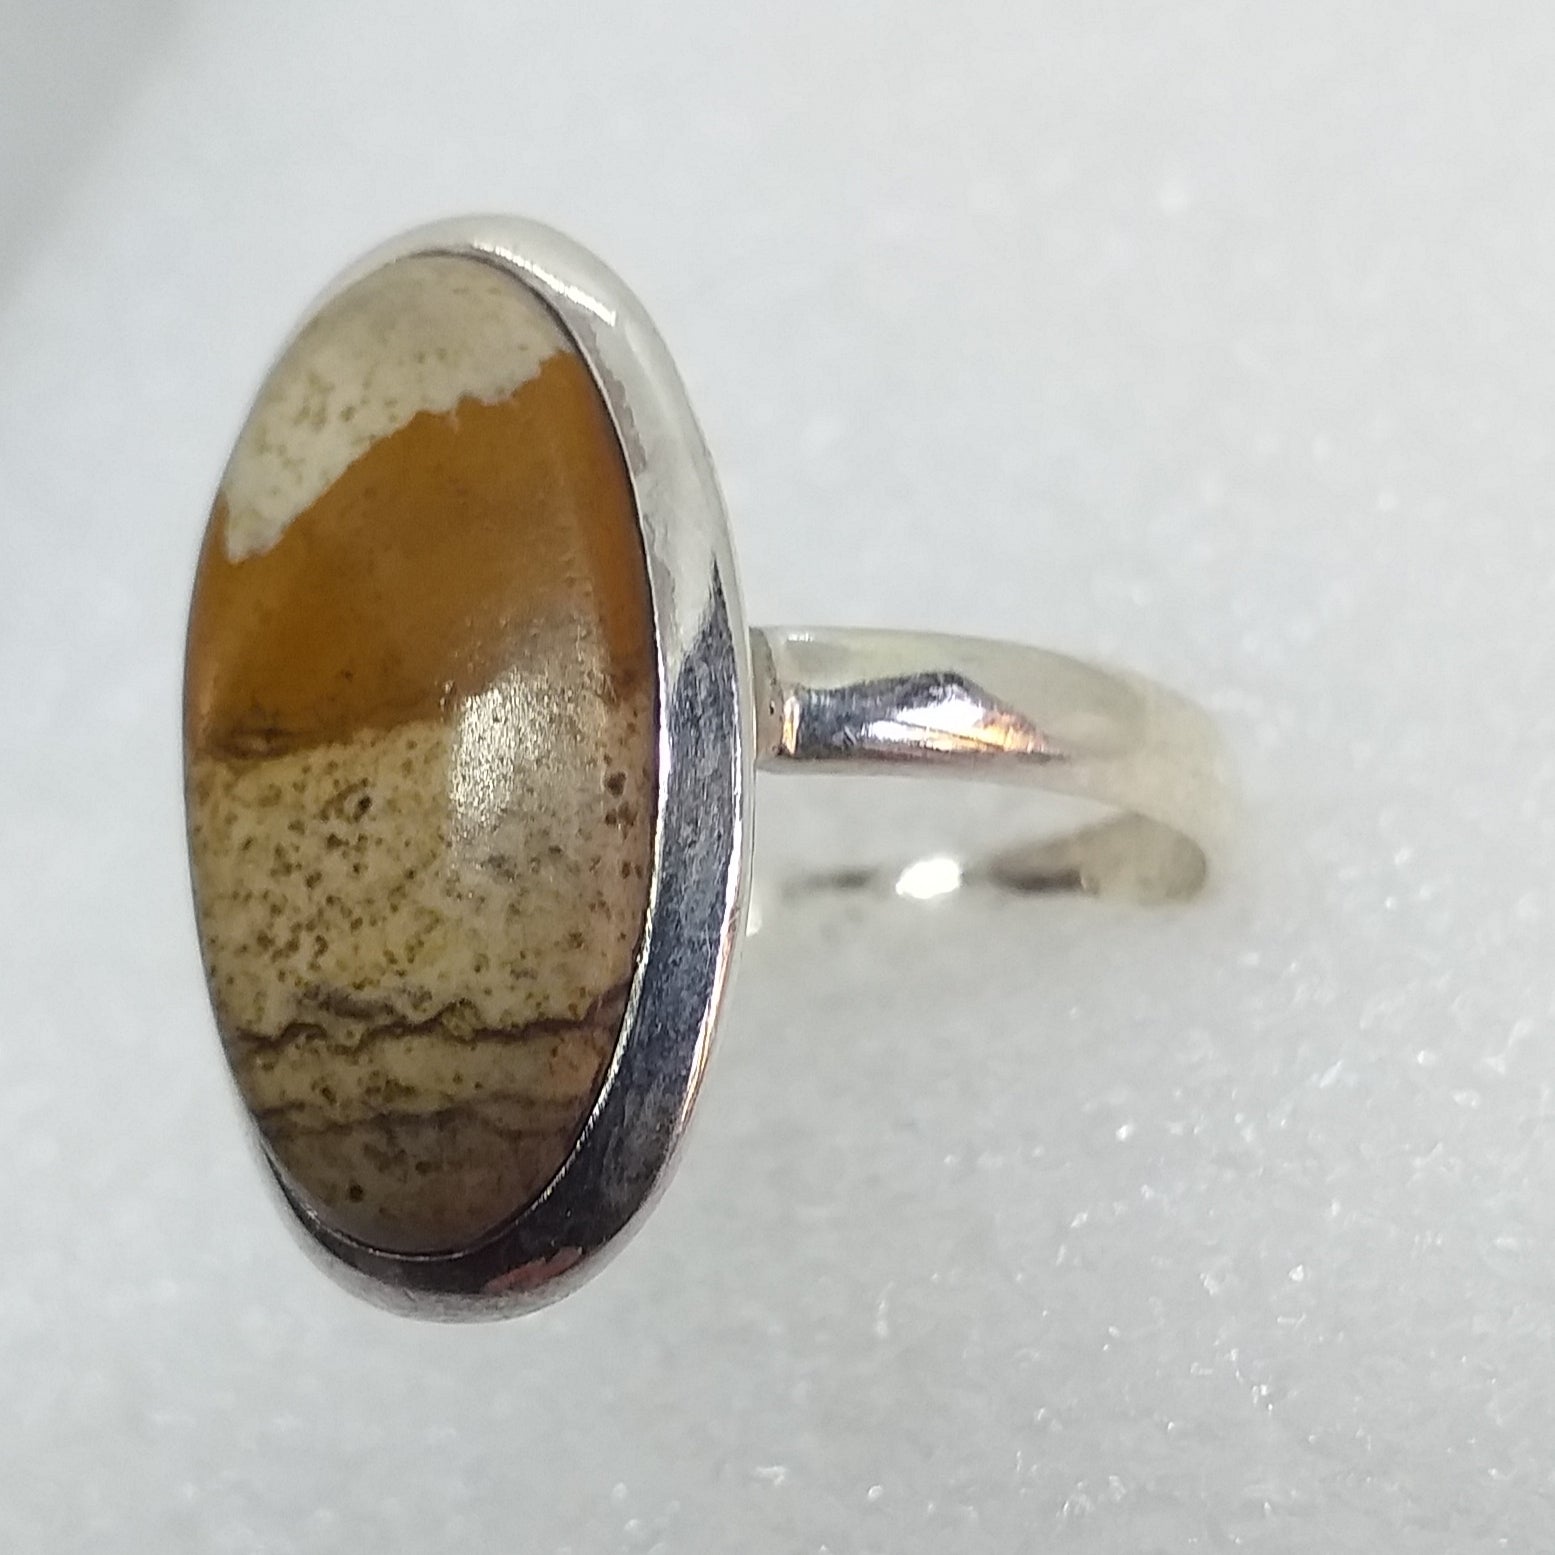 JASPIS Landschaftsjaspis Ring Gr. 20 925 Sterling Silber